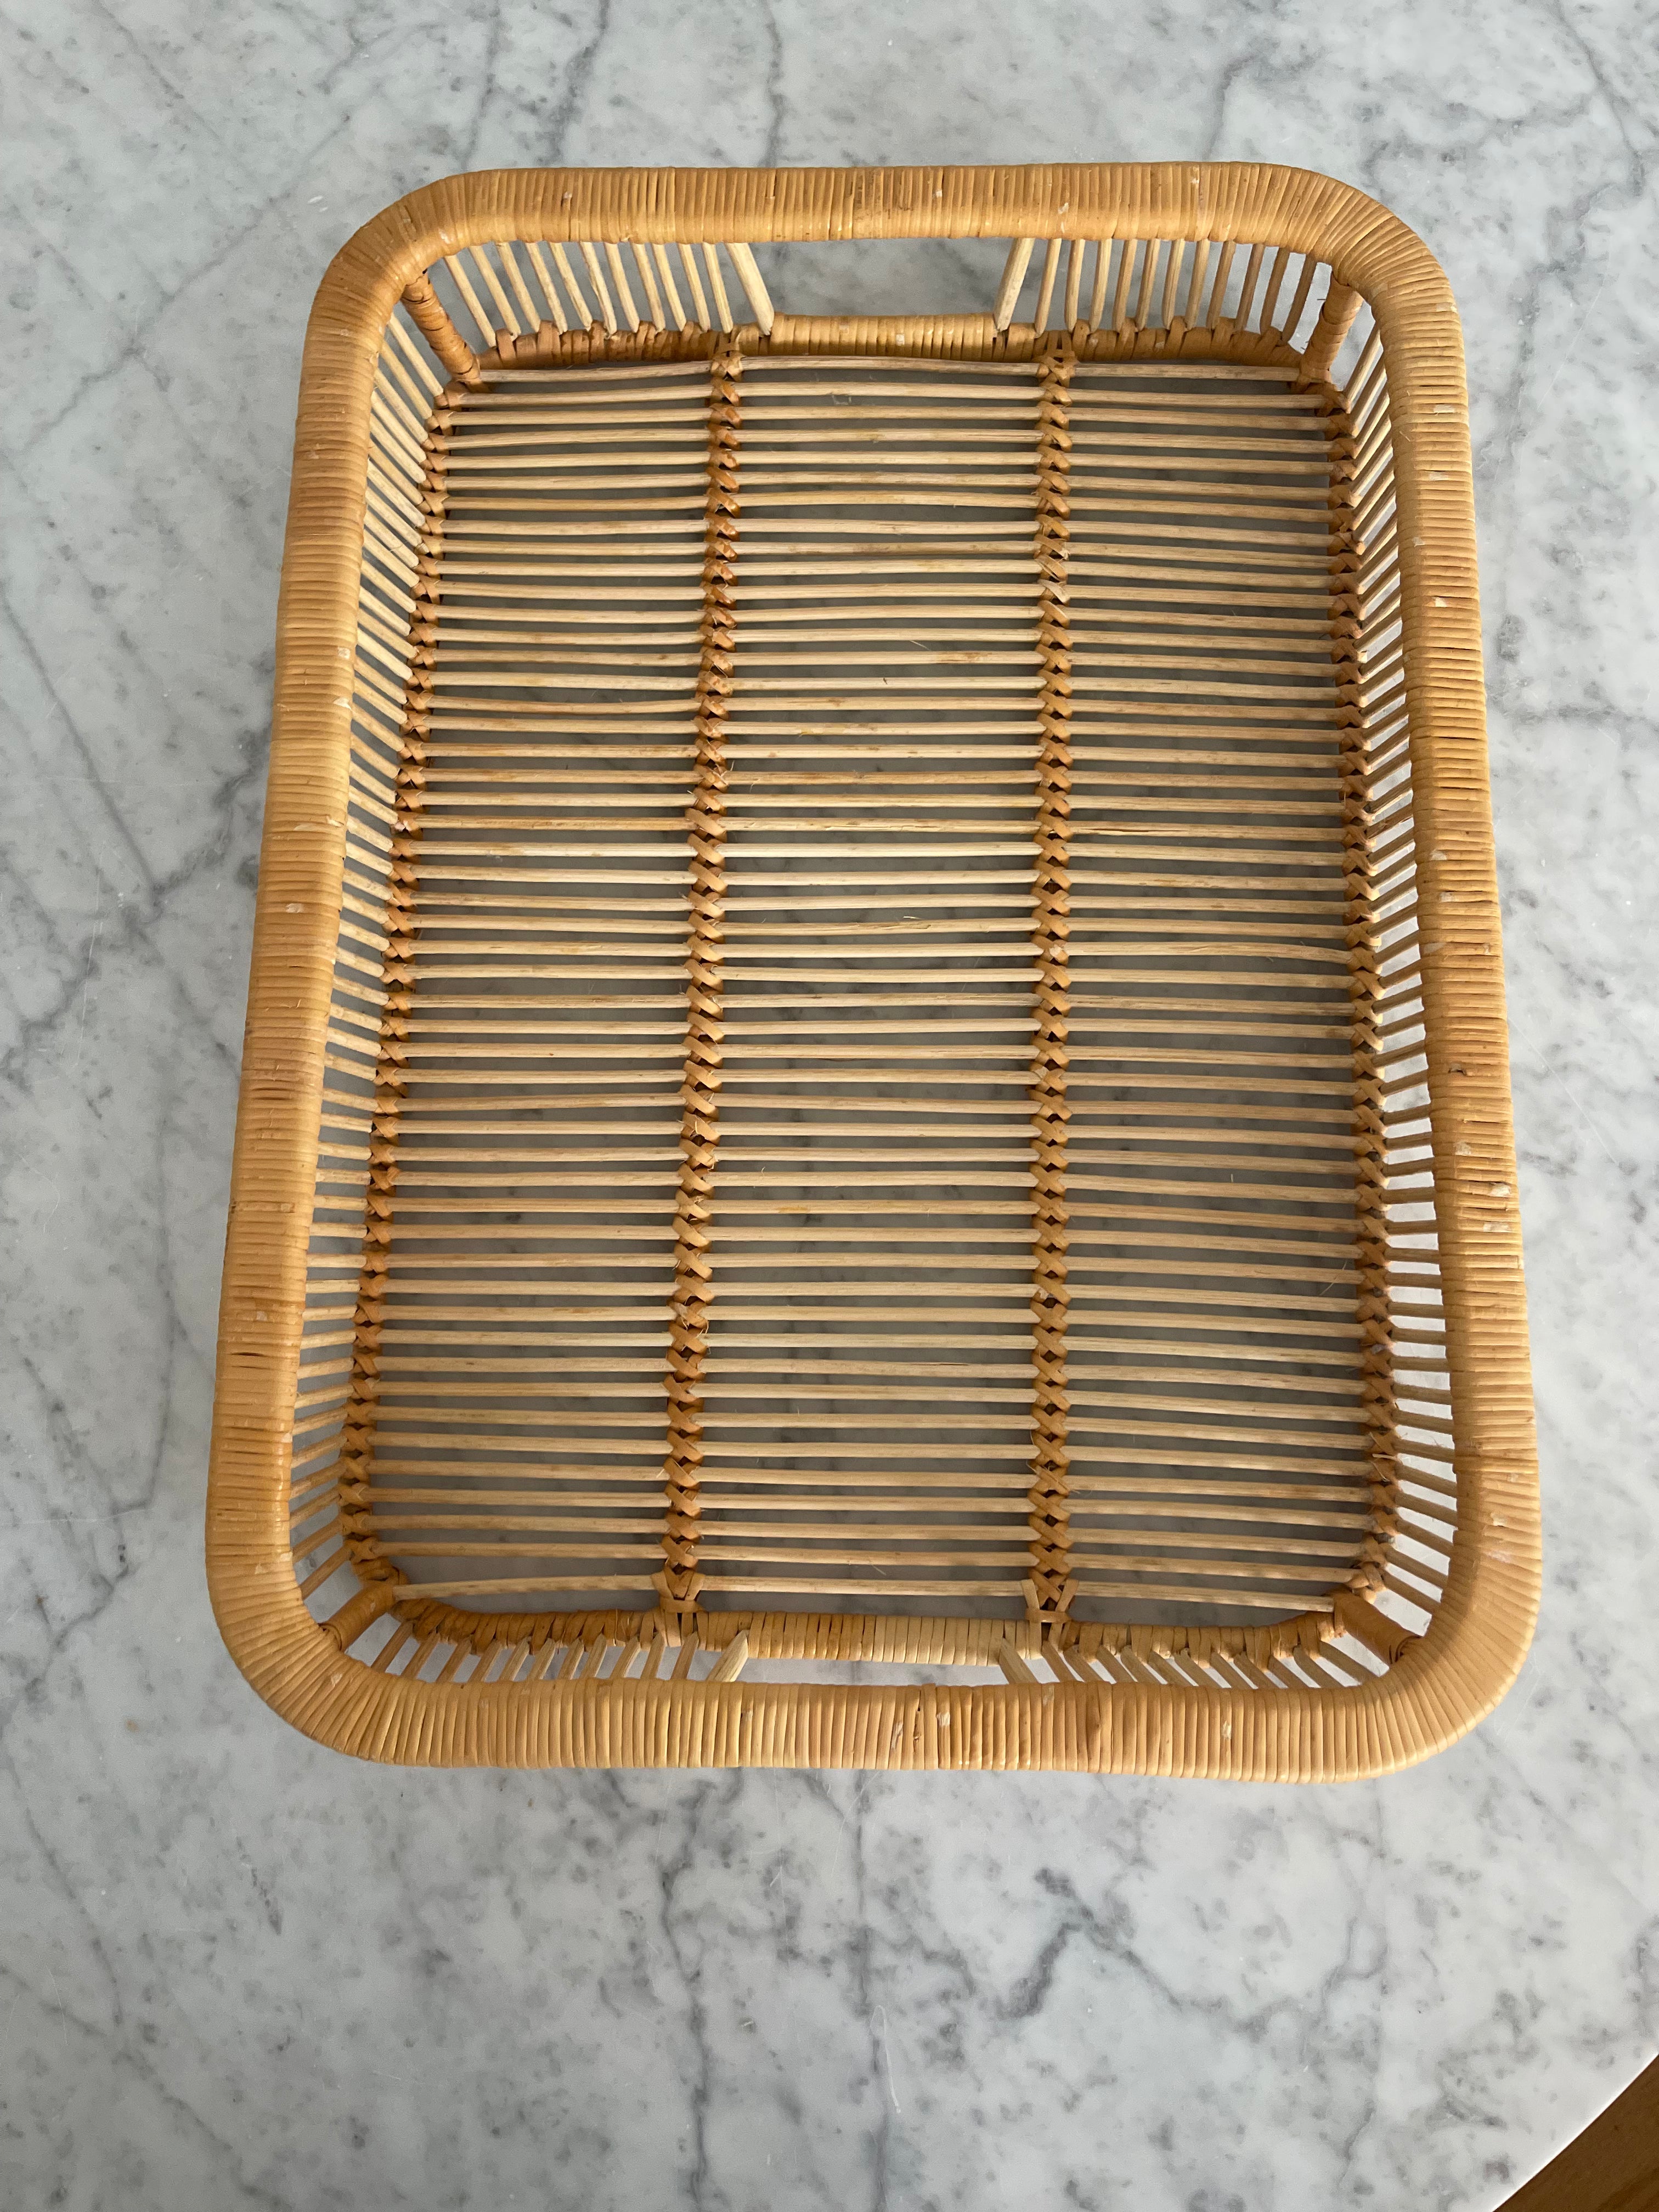 Vintage Wicker Tray 20” x 15”